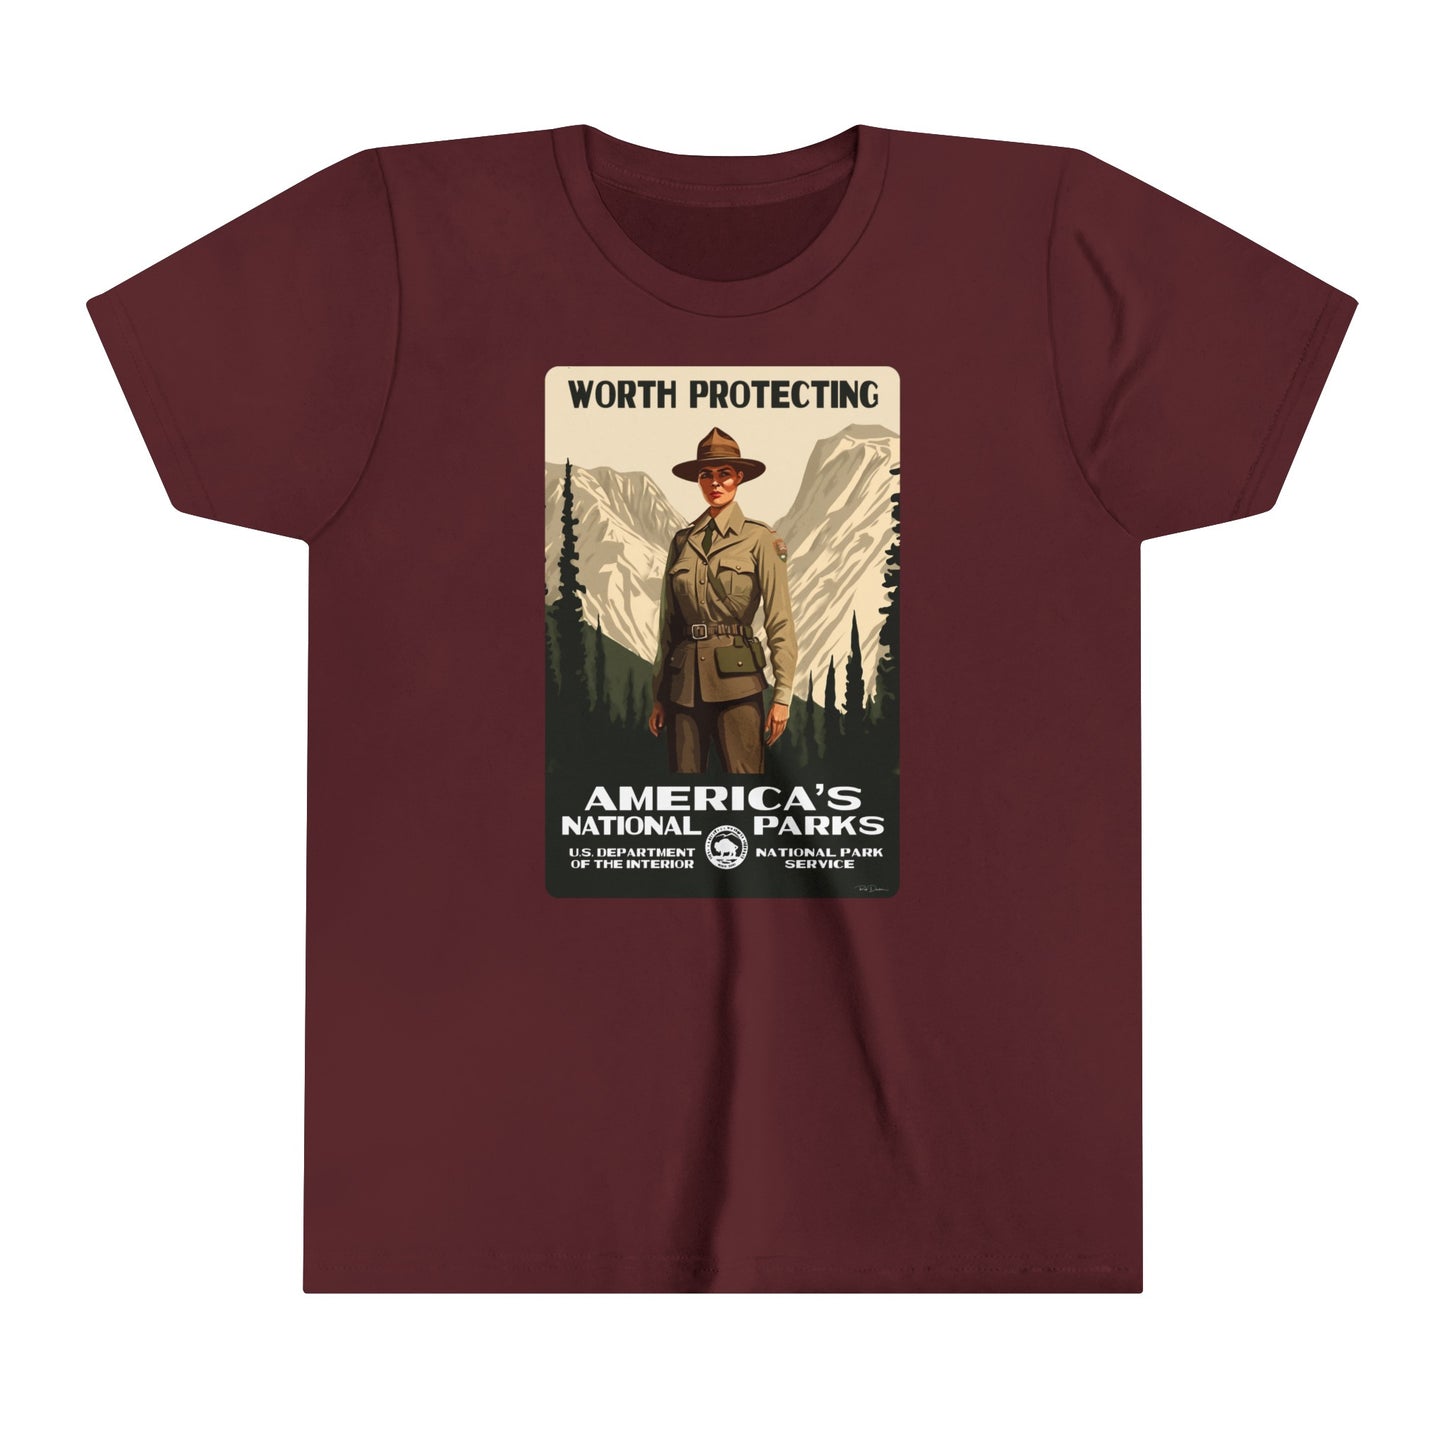 America's National Parks - Worth Protecting (Female Ranger) Kids' T-Shirt